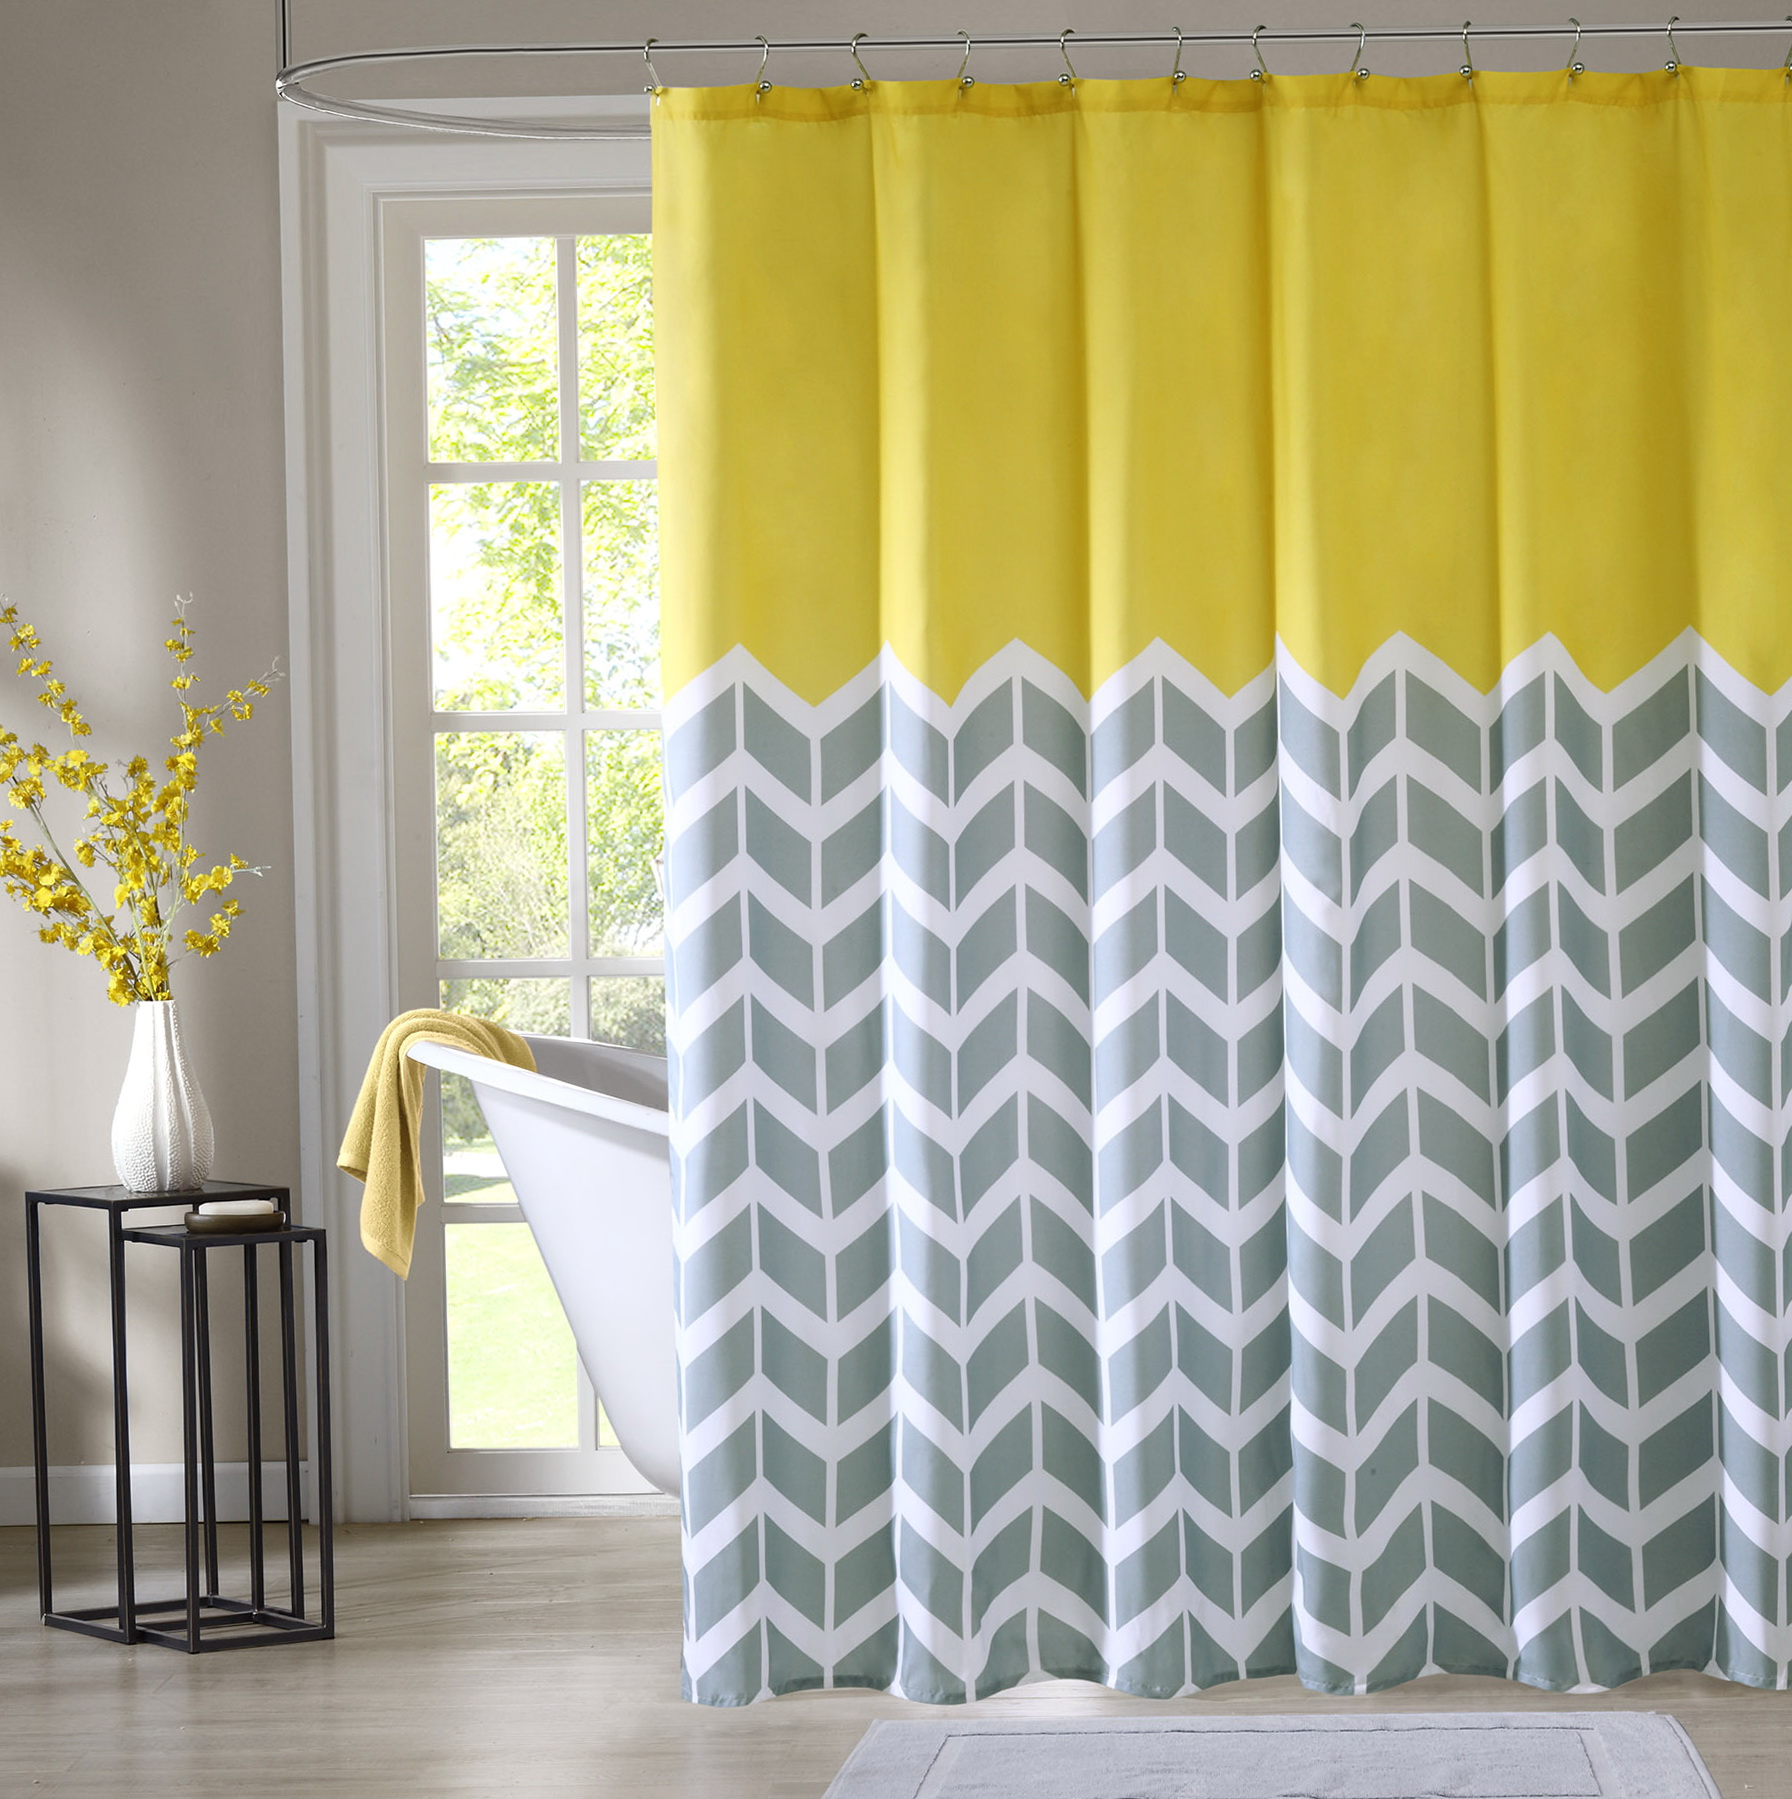 Cheap Shower Curtain Sets | Home Design Ideas